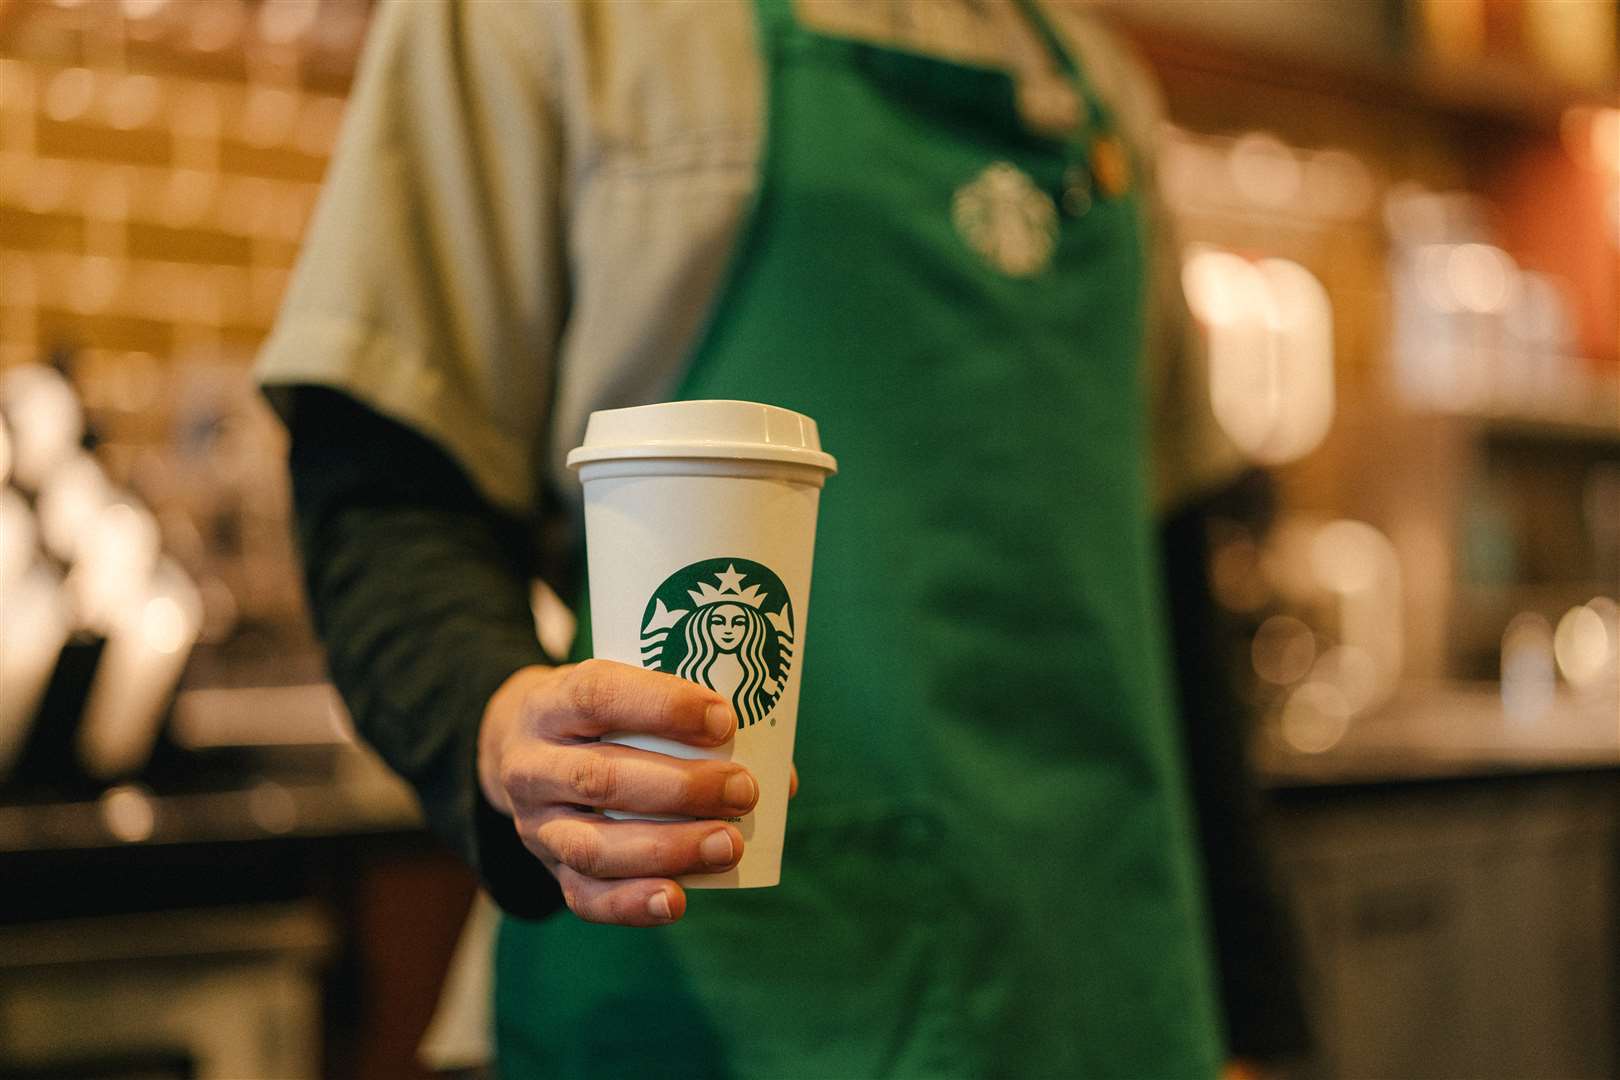 Starbucks said it has been testing its operations behind closed doors (Starbucks/PA)